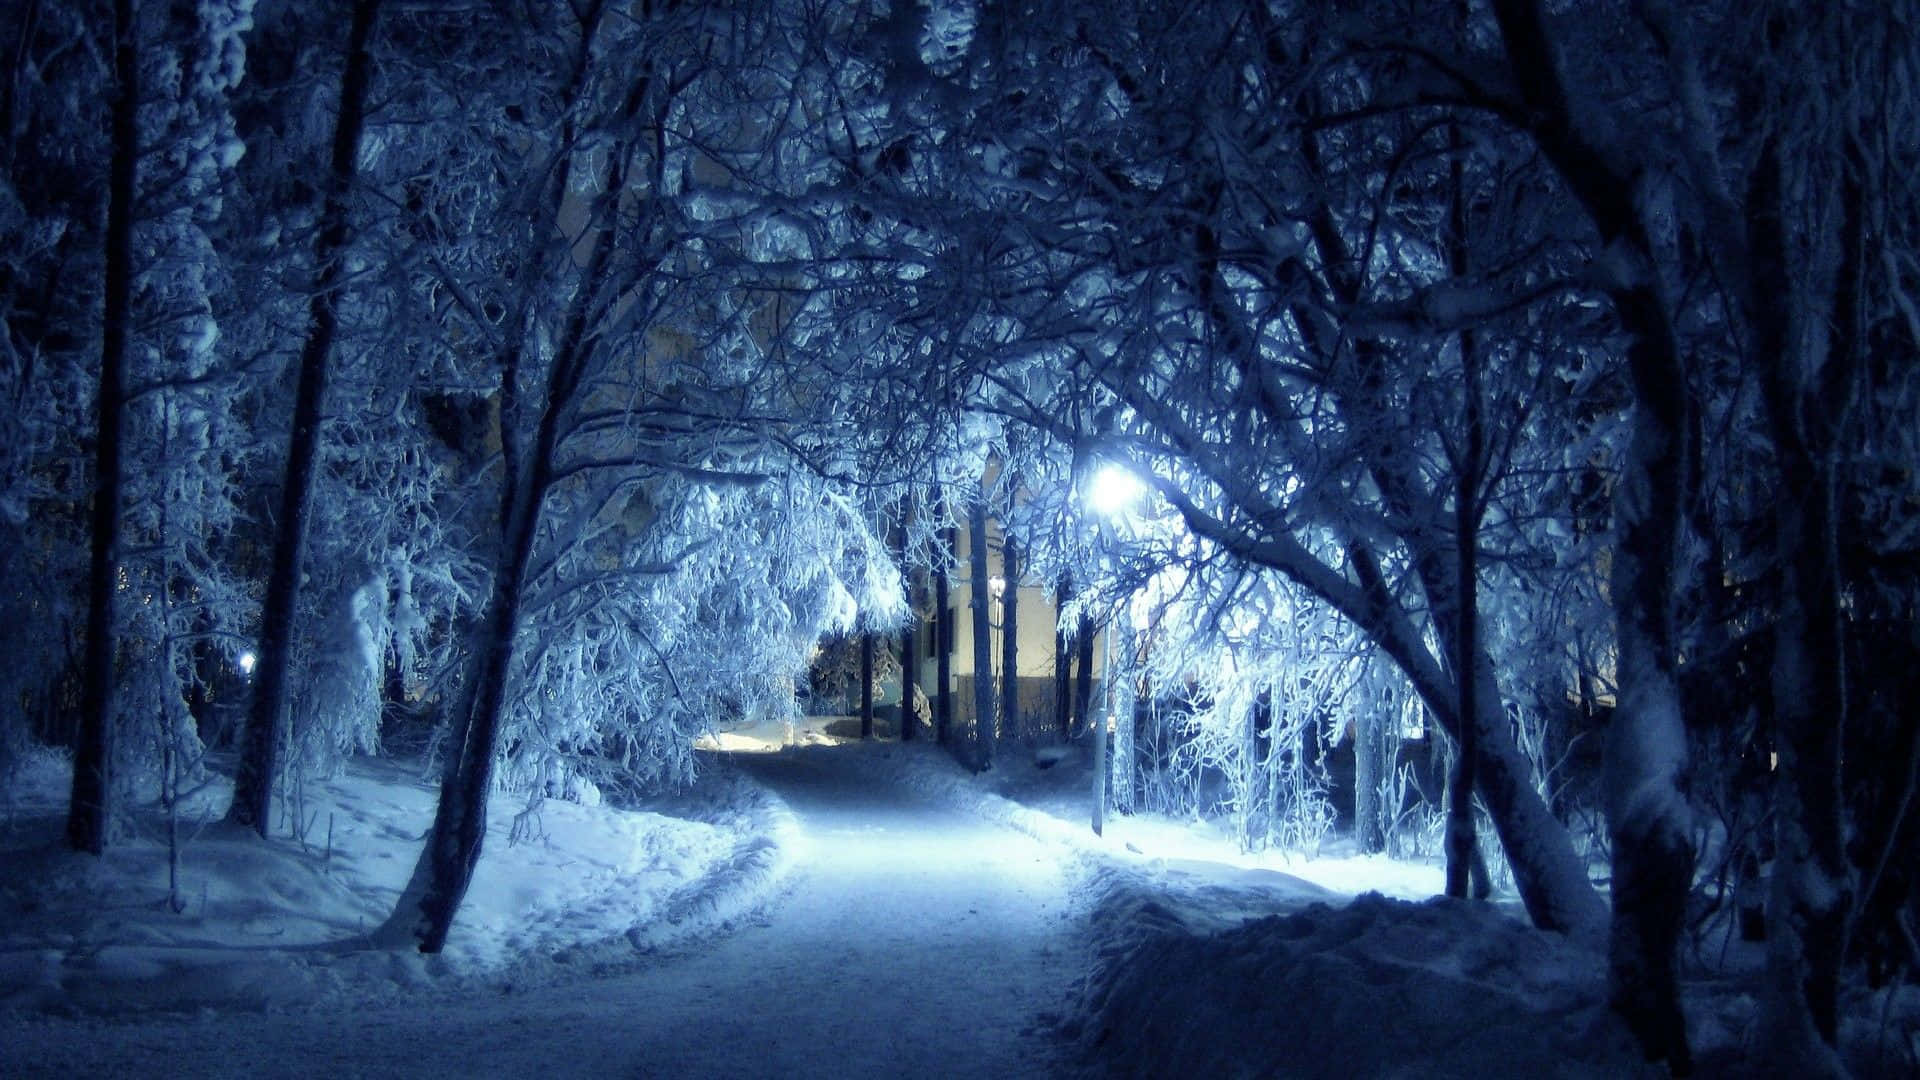 "Snow-Covered Winter Wonderland Zoom Background"